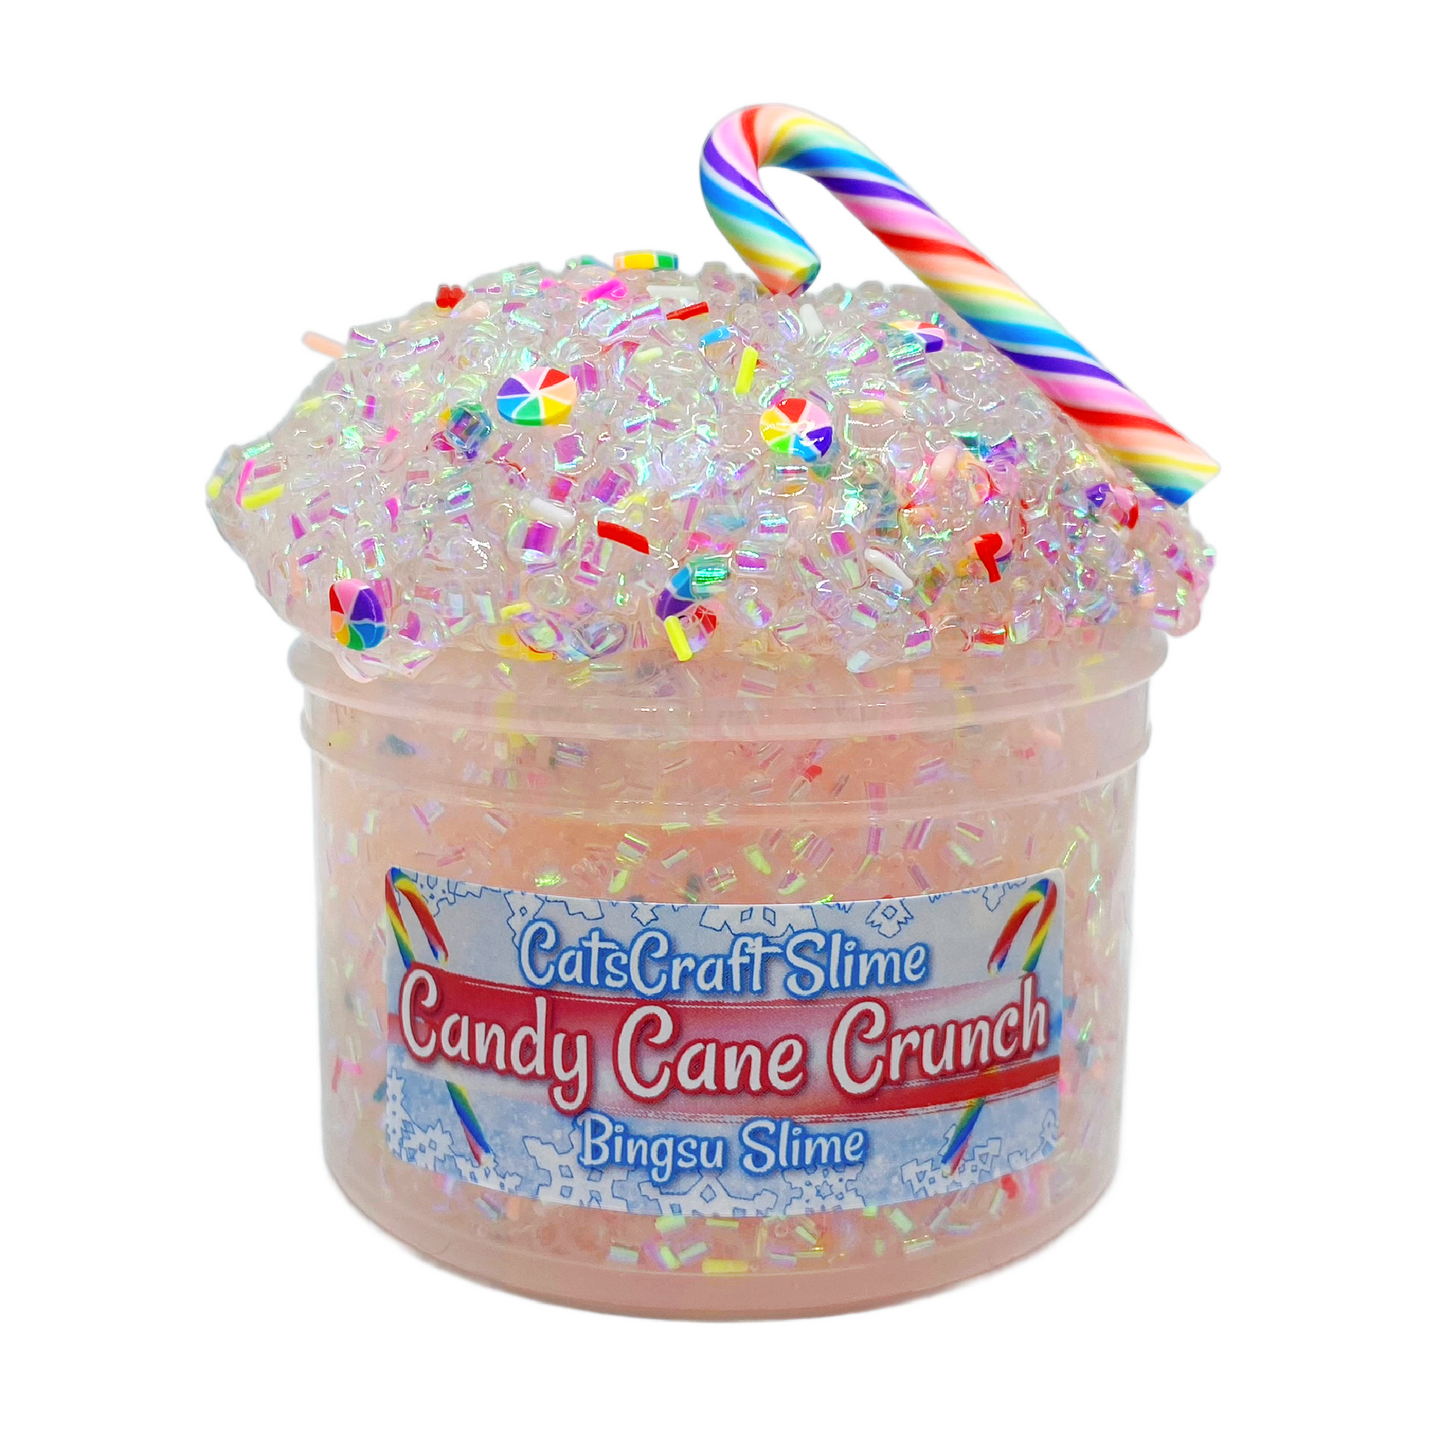 Bingsu Slime "CandyCane Crunch" SCENTED clear rainbow Crunchy ASMR with candy cane Charm